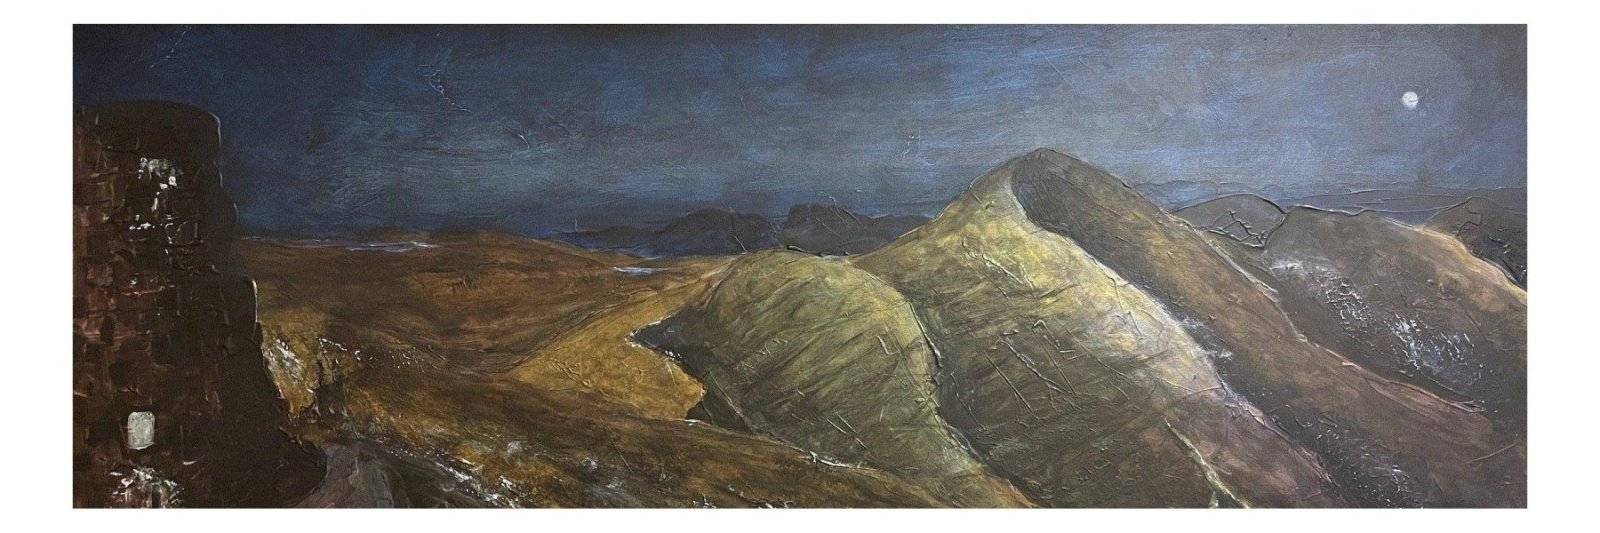 Torridon Hills Moonlight-Panoramic Prints-Scottish Lochs & Mountains Art Gallery-Paintings, Prints, Homeware, Art Gifts From Scotland By Scottish Artist Kevin Hunter